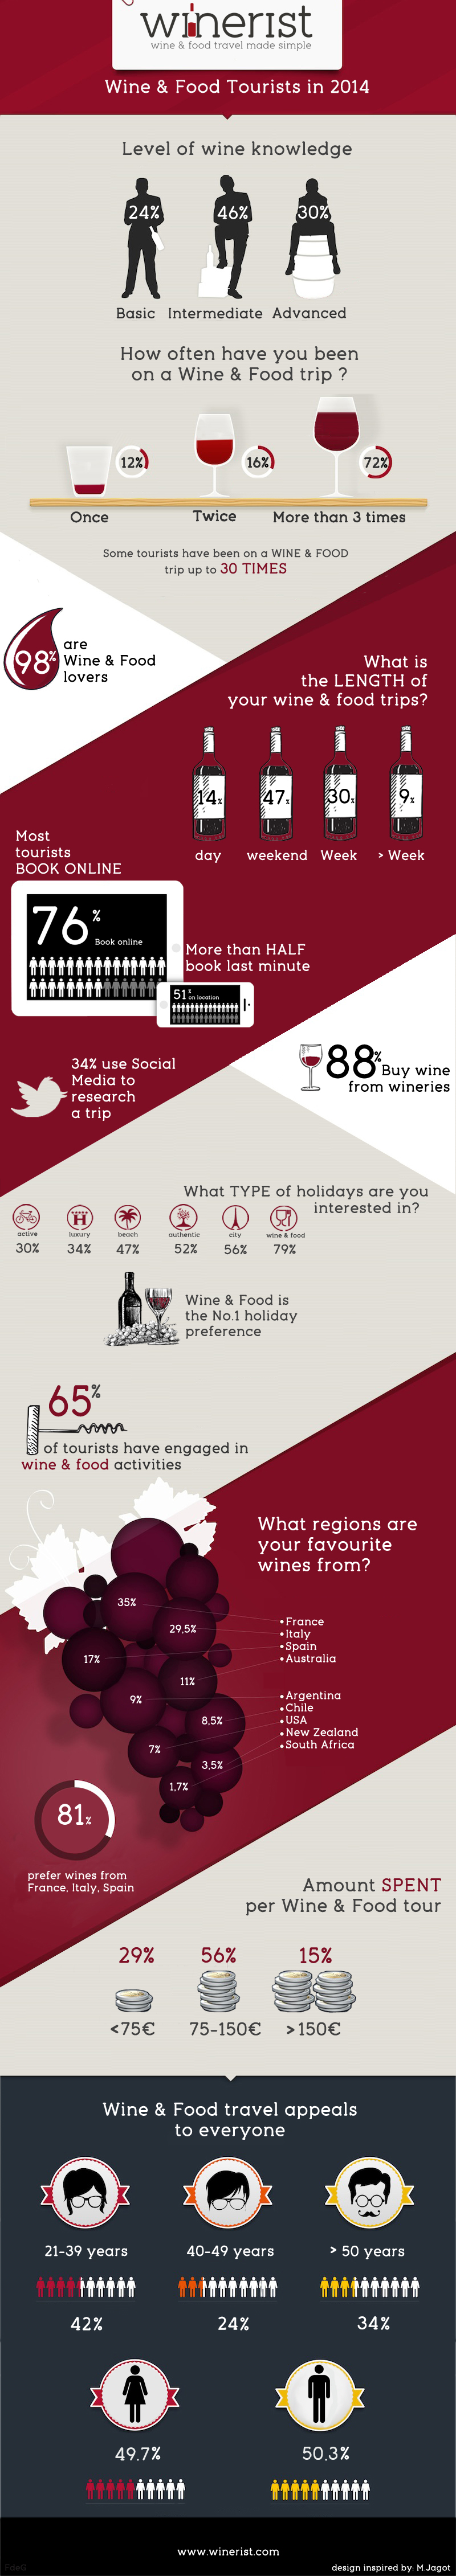 Wine & Food Tourist Survey